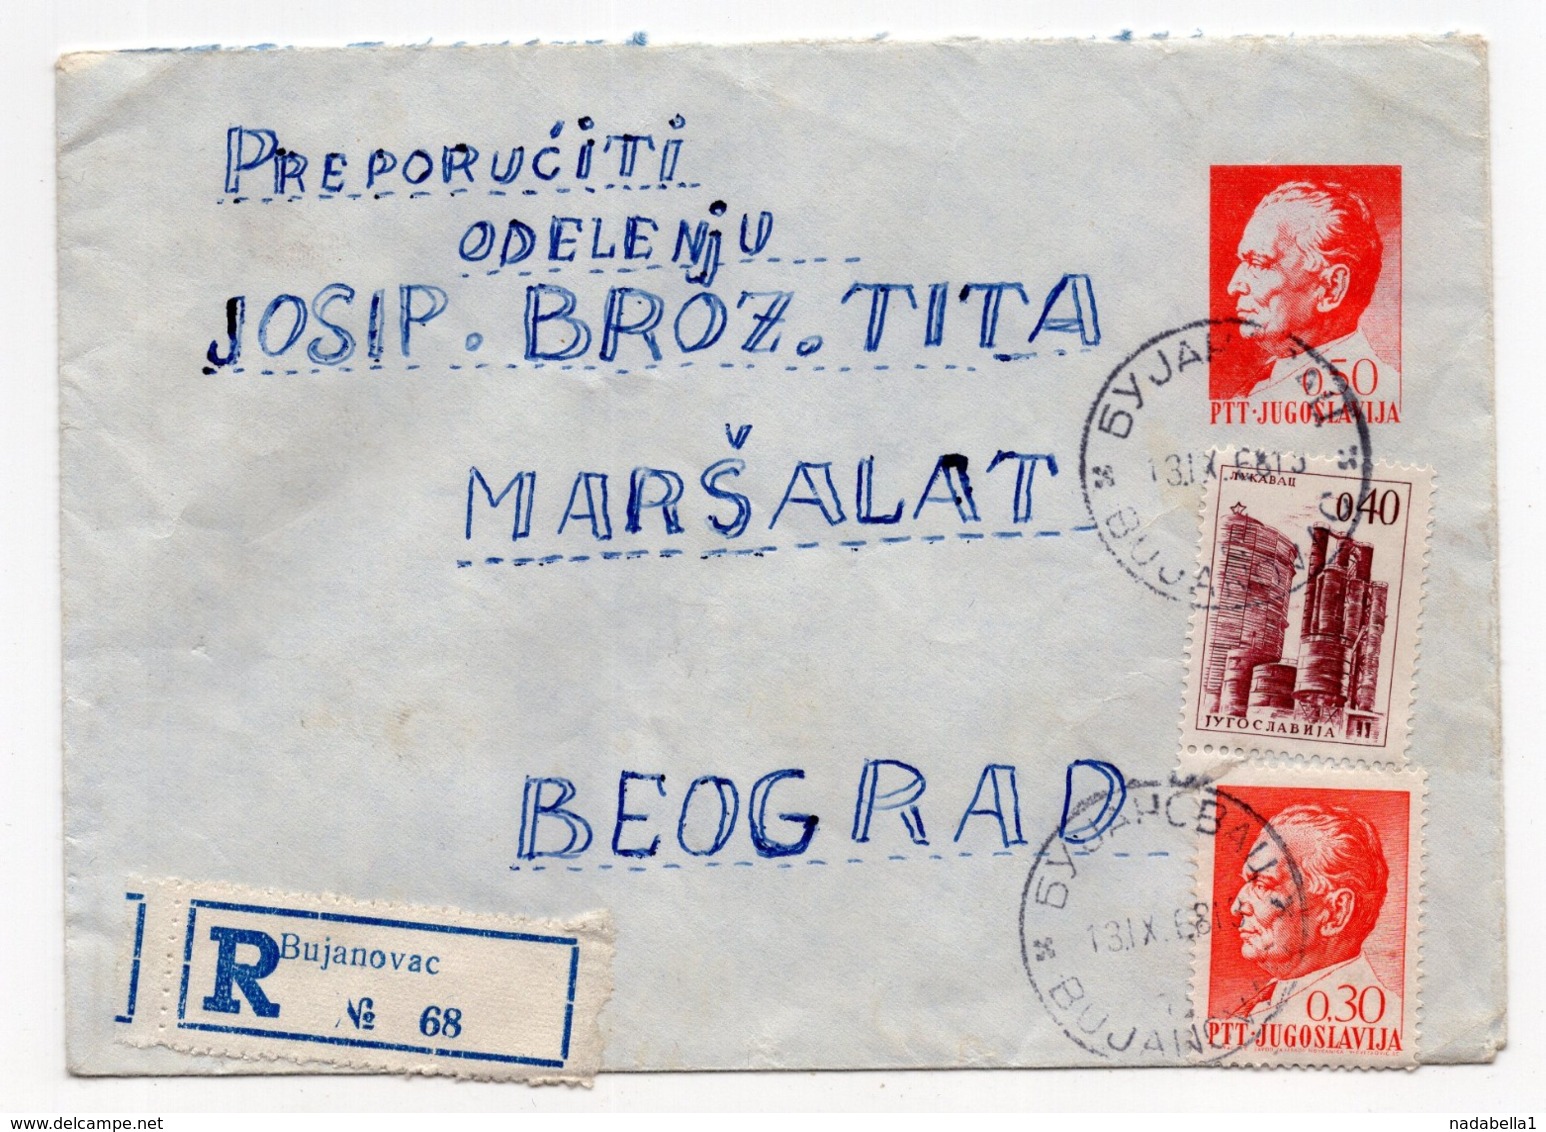 1968 YUGOSLAVIA, SERBIA, BUJANOVAC TO BELGRADE,TITO, REGISTERED MAIL, STATIONERY COVER - Postal Stationery